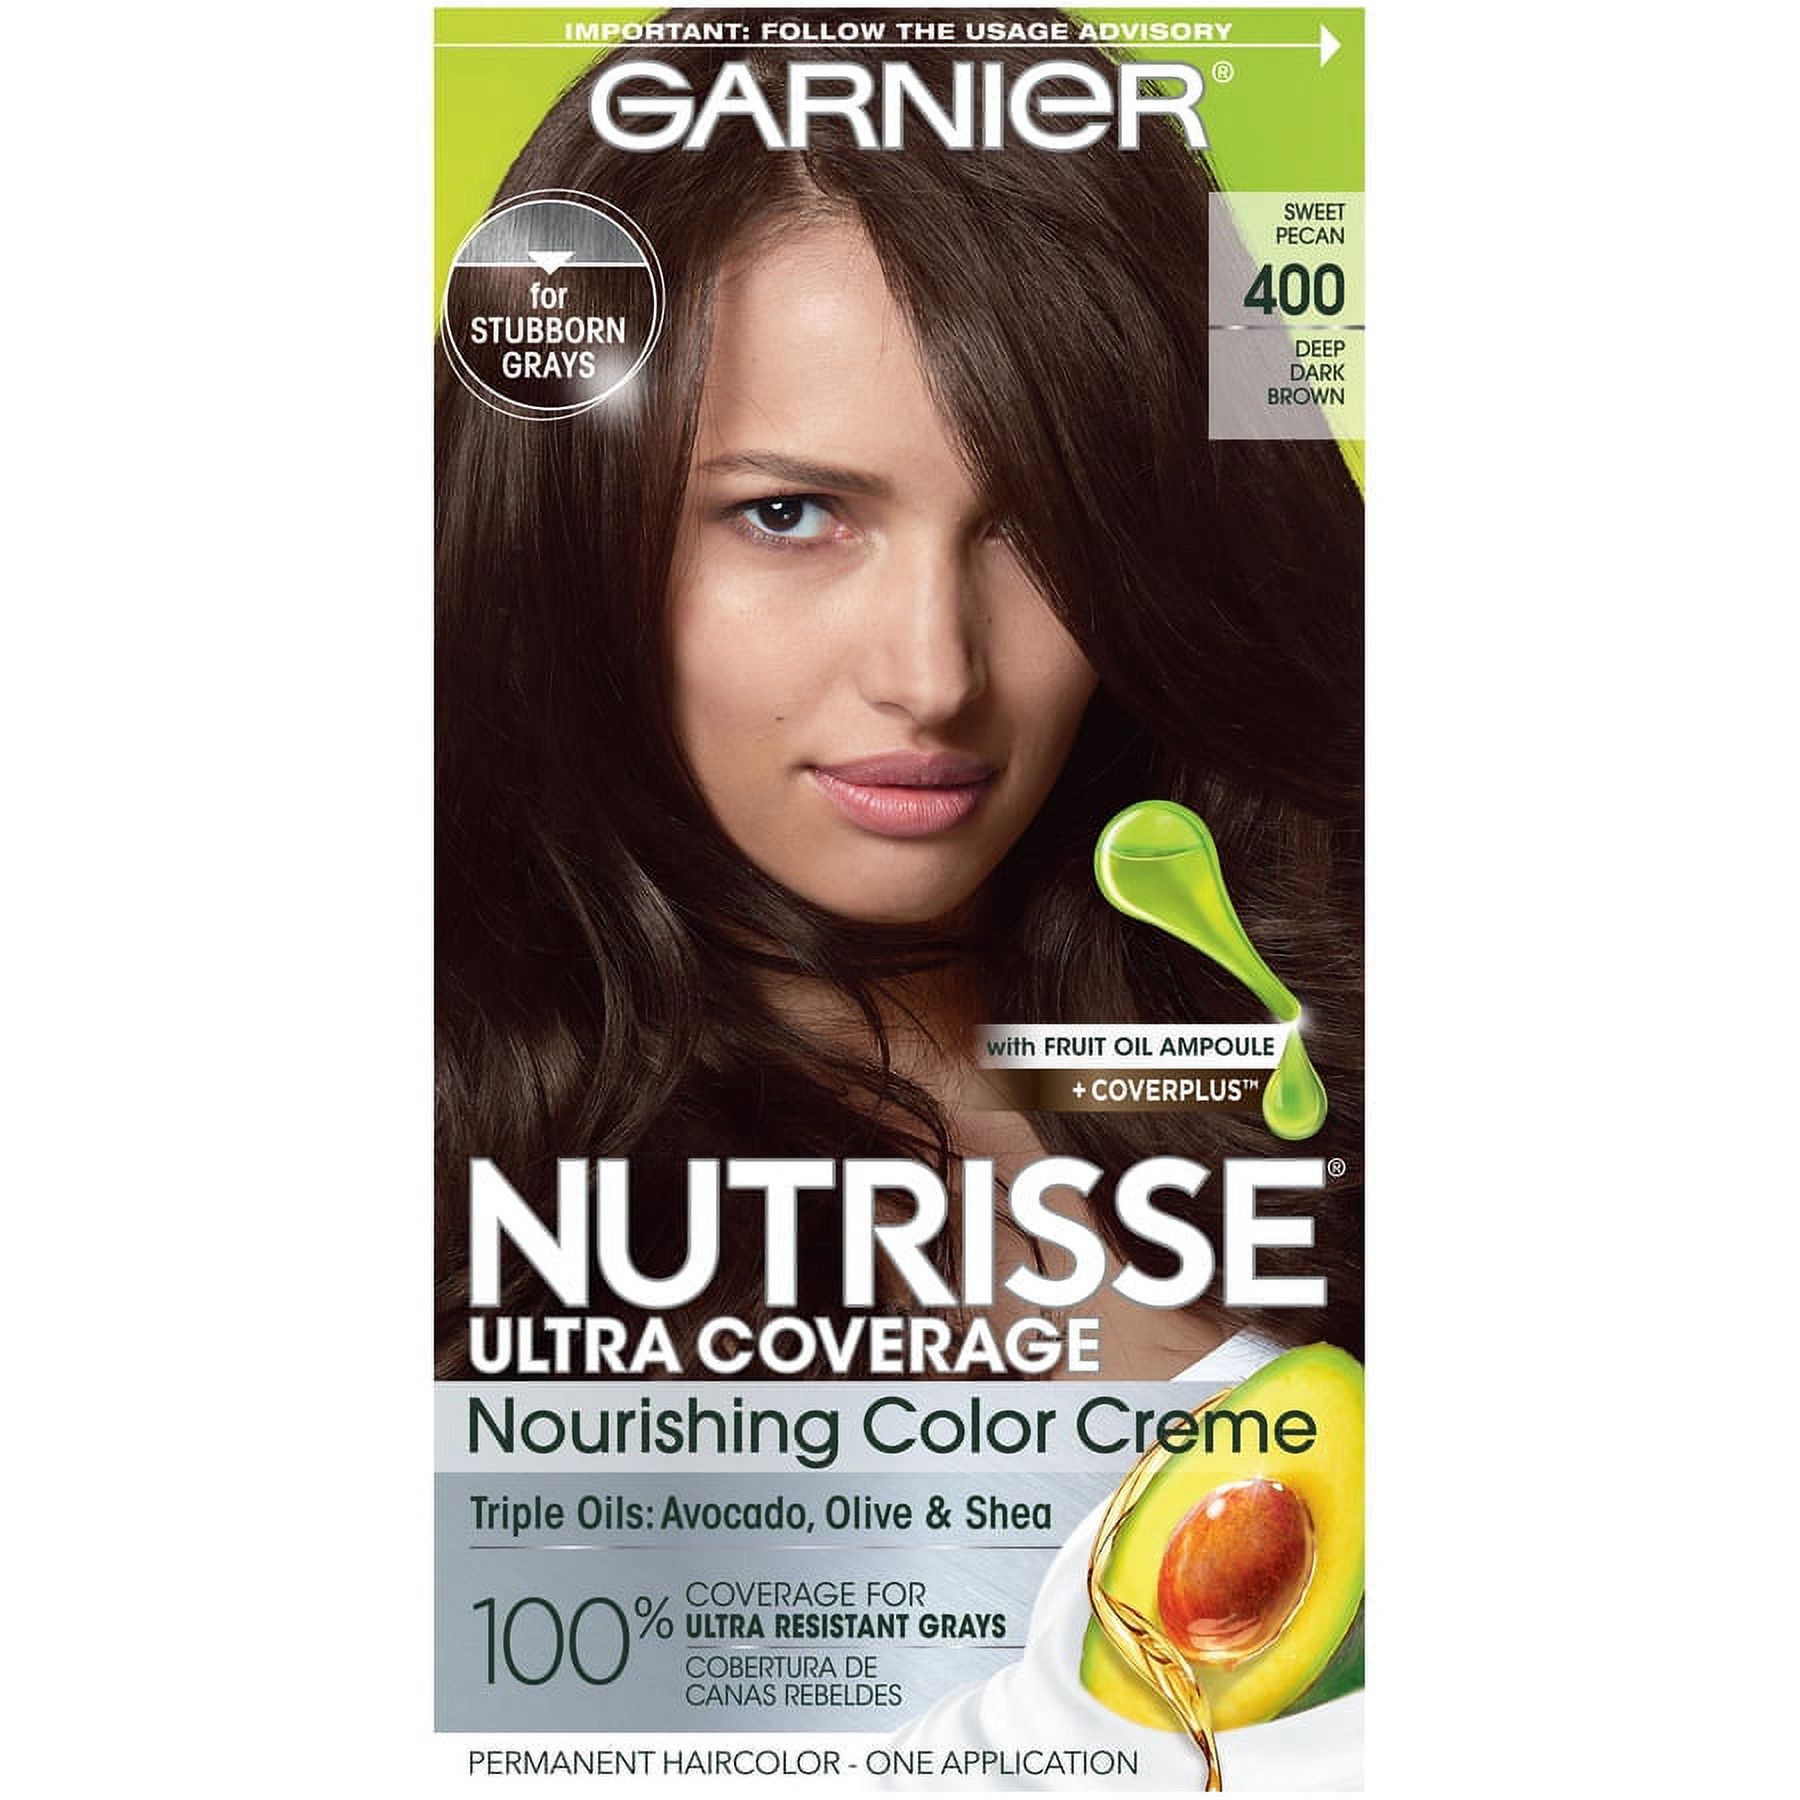 Garnier Nutrisse Nourishing Hair Color Creme, 400 Deep Dark Brown Sweet Pecan - image 1 of 8